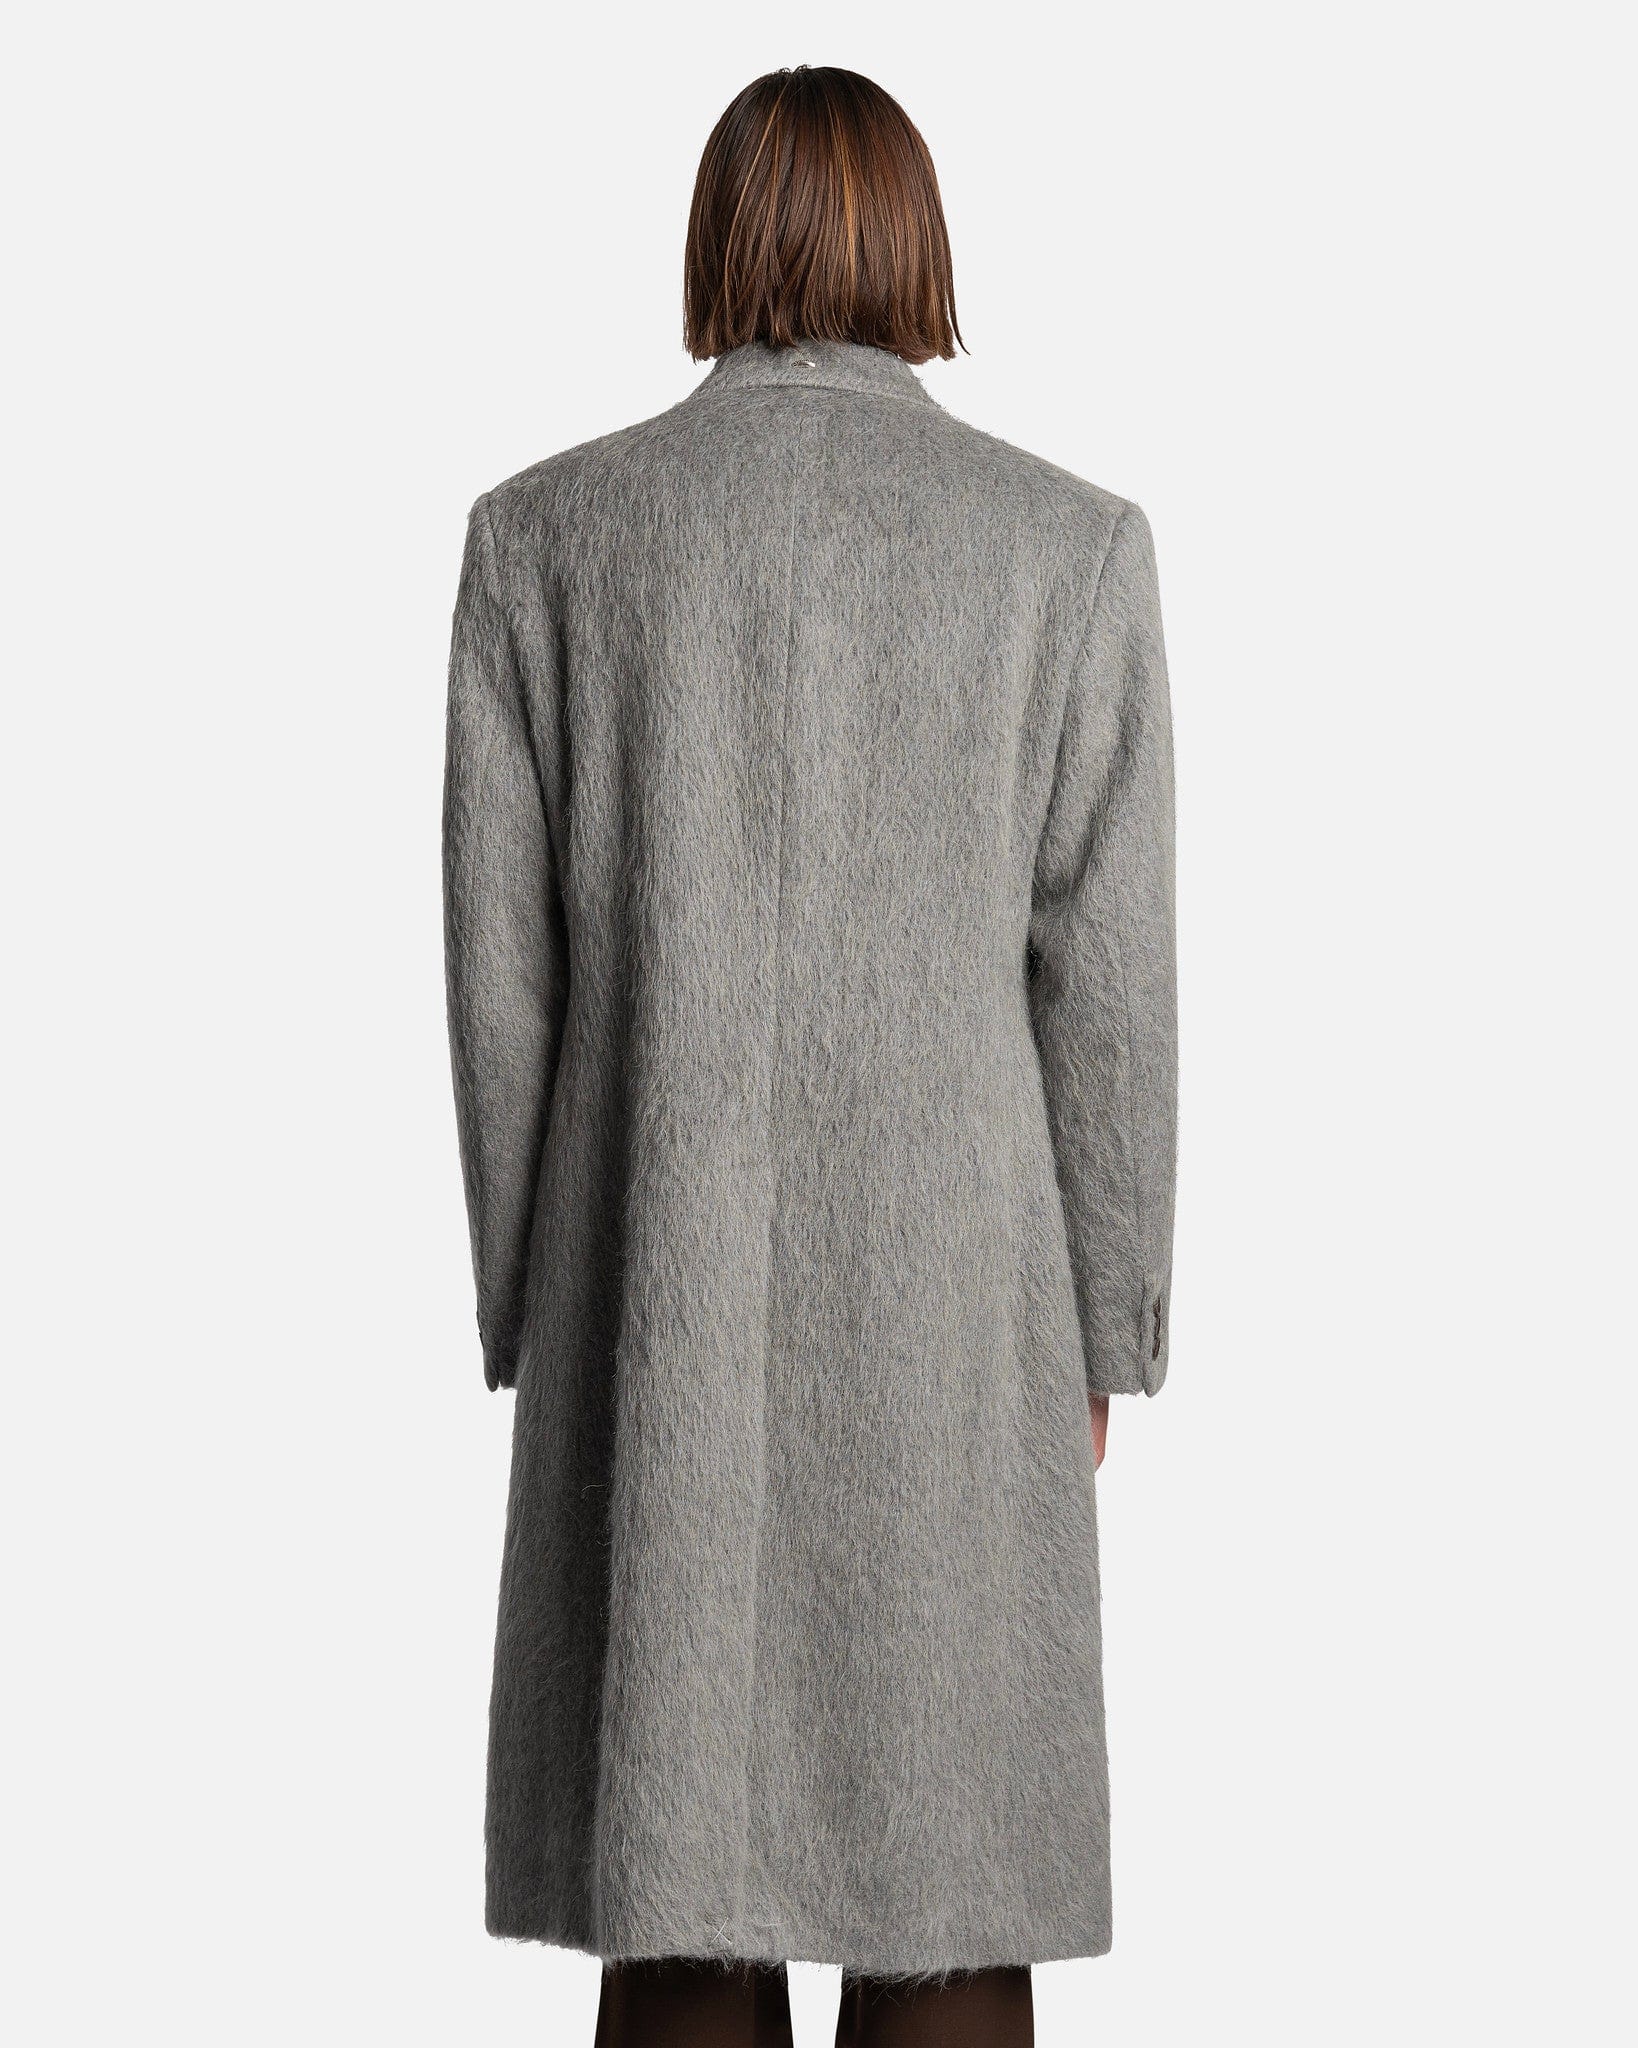 Whale Coat in Wishkah Grey Hairy Alpaca